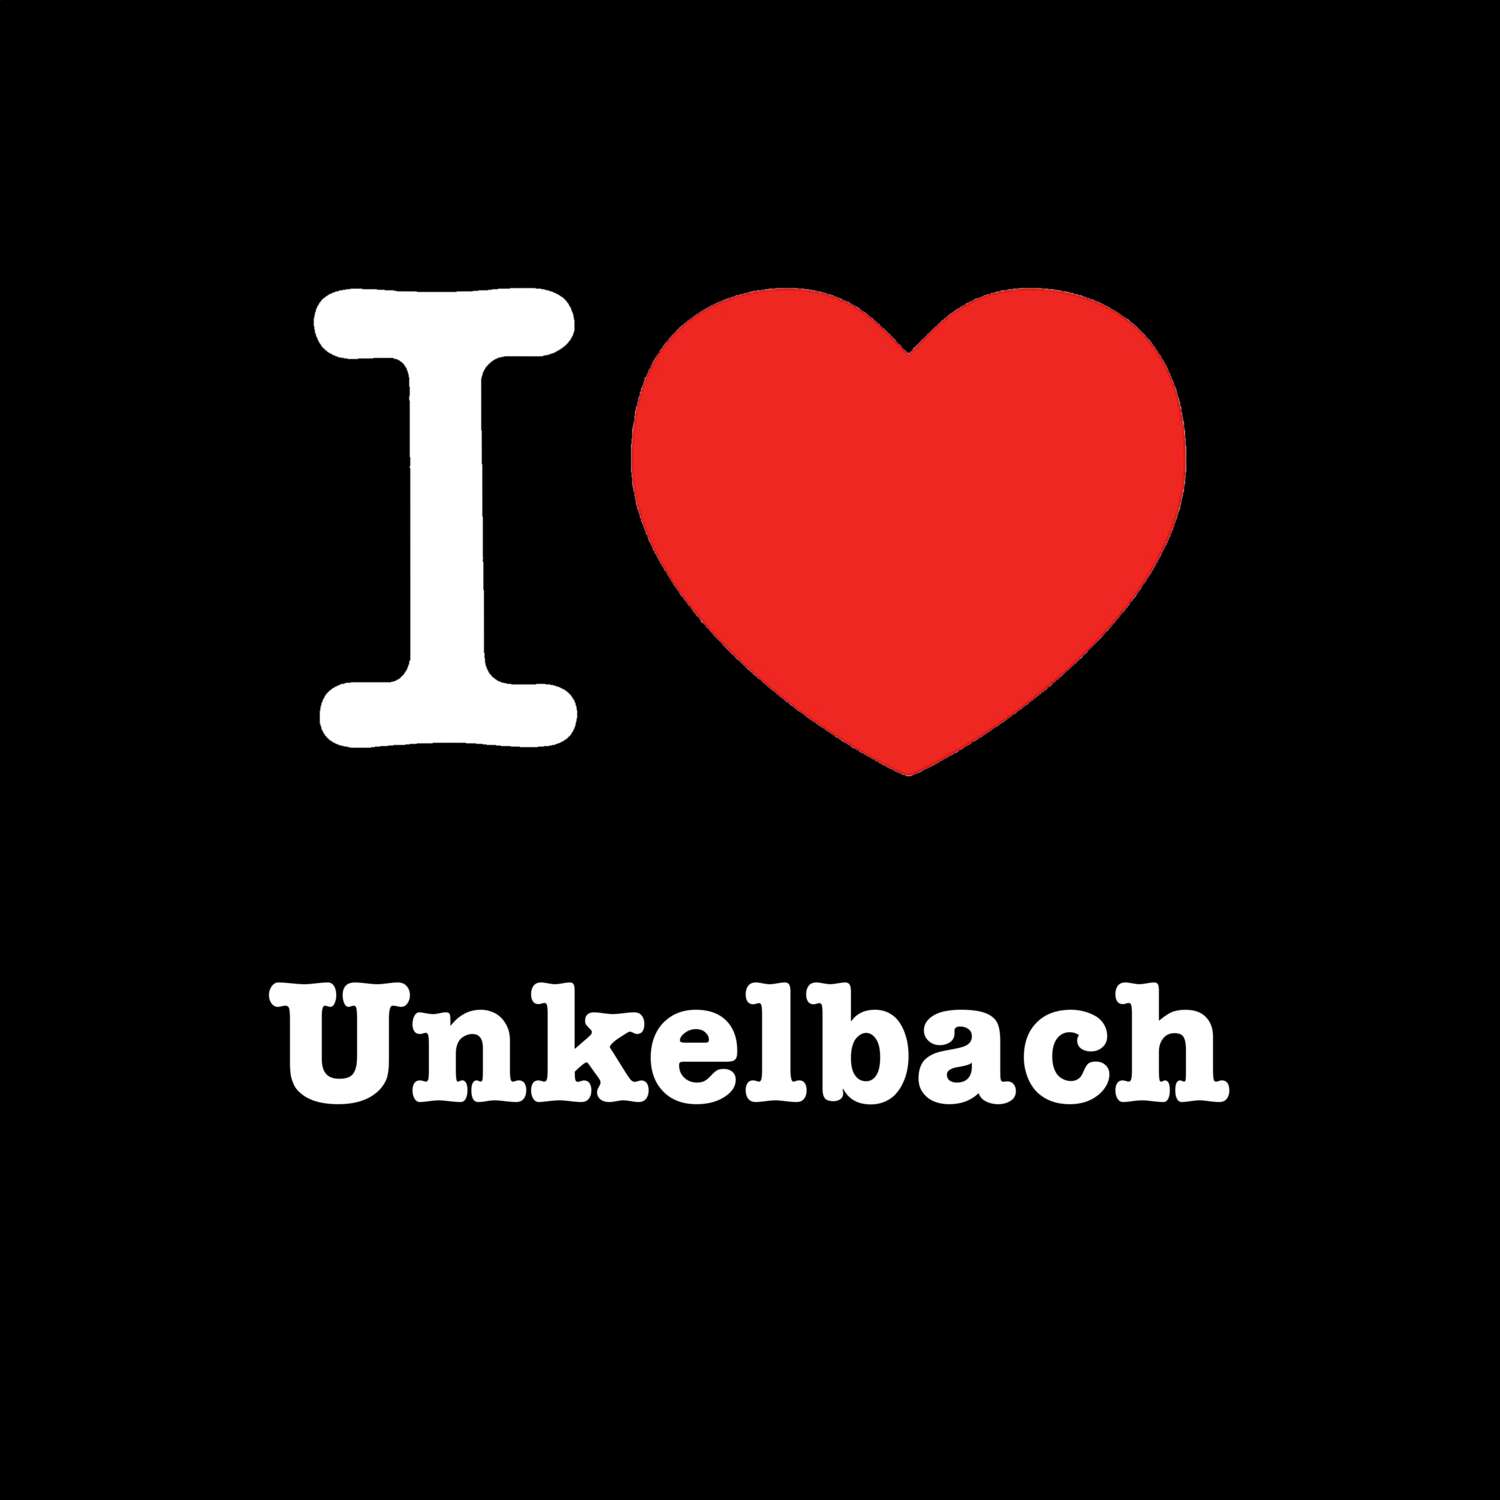 Unkelbach T-Shirt »I love«